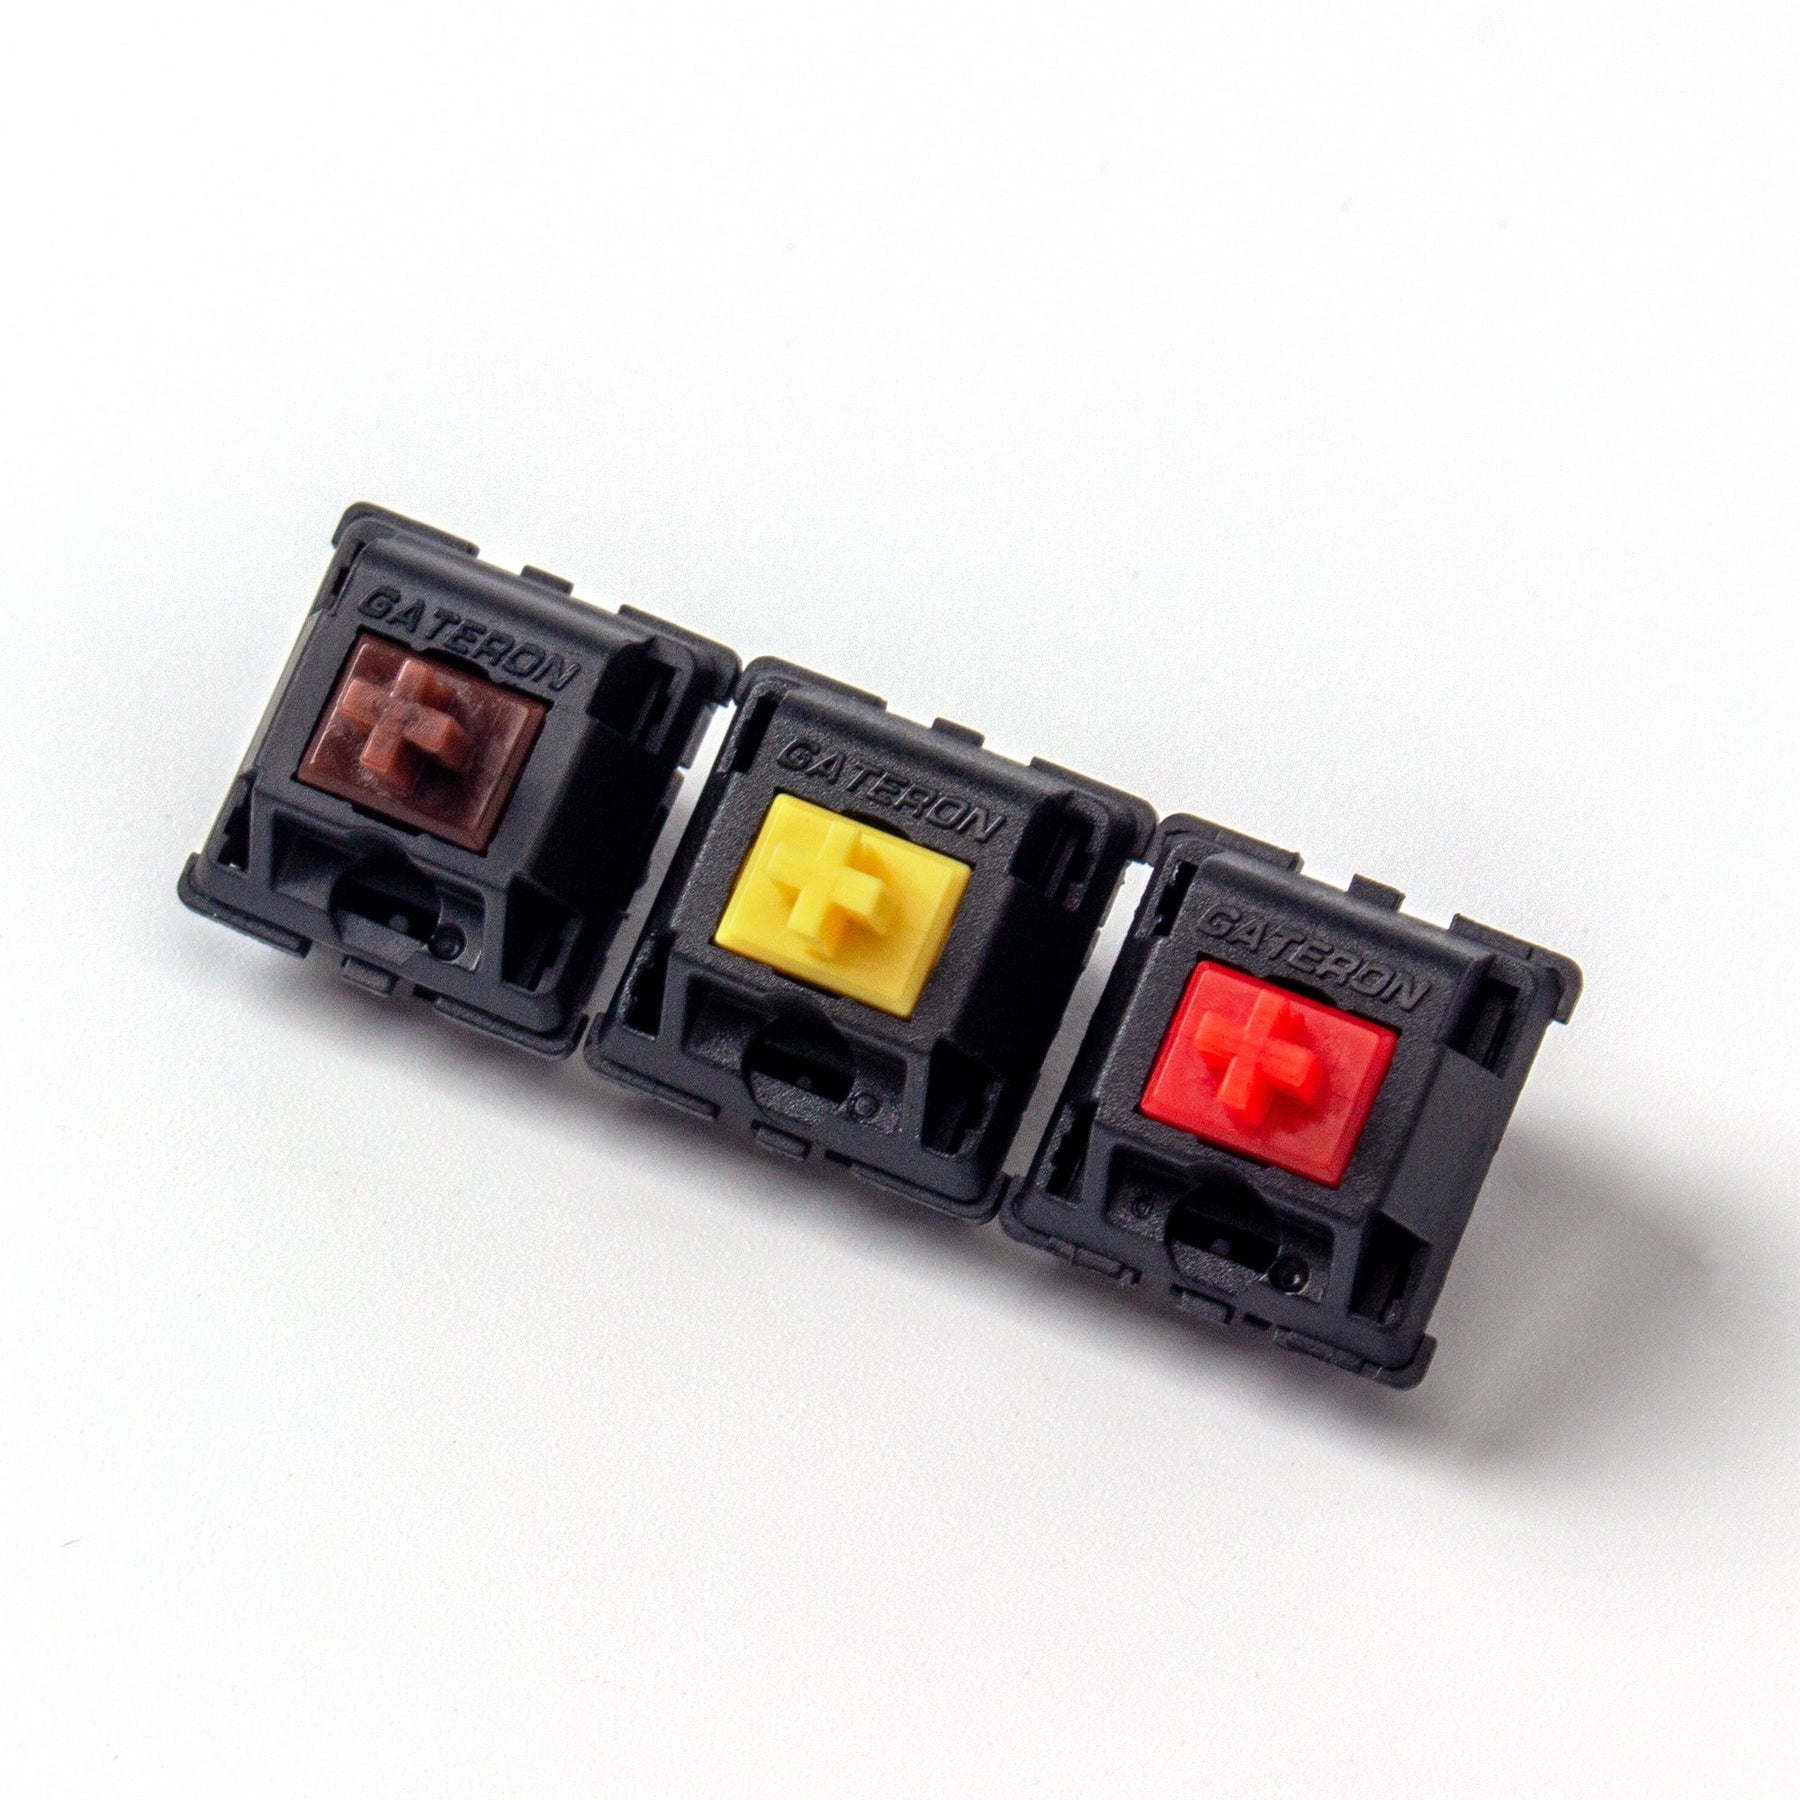 YUNZII Gateron KS-3 Full Black Switches